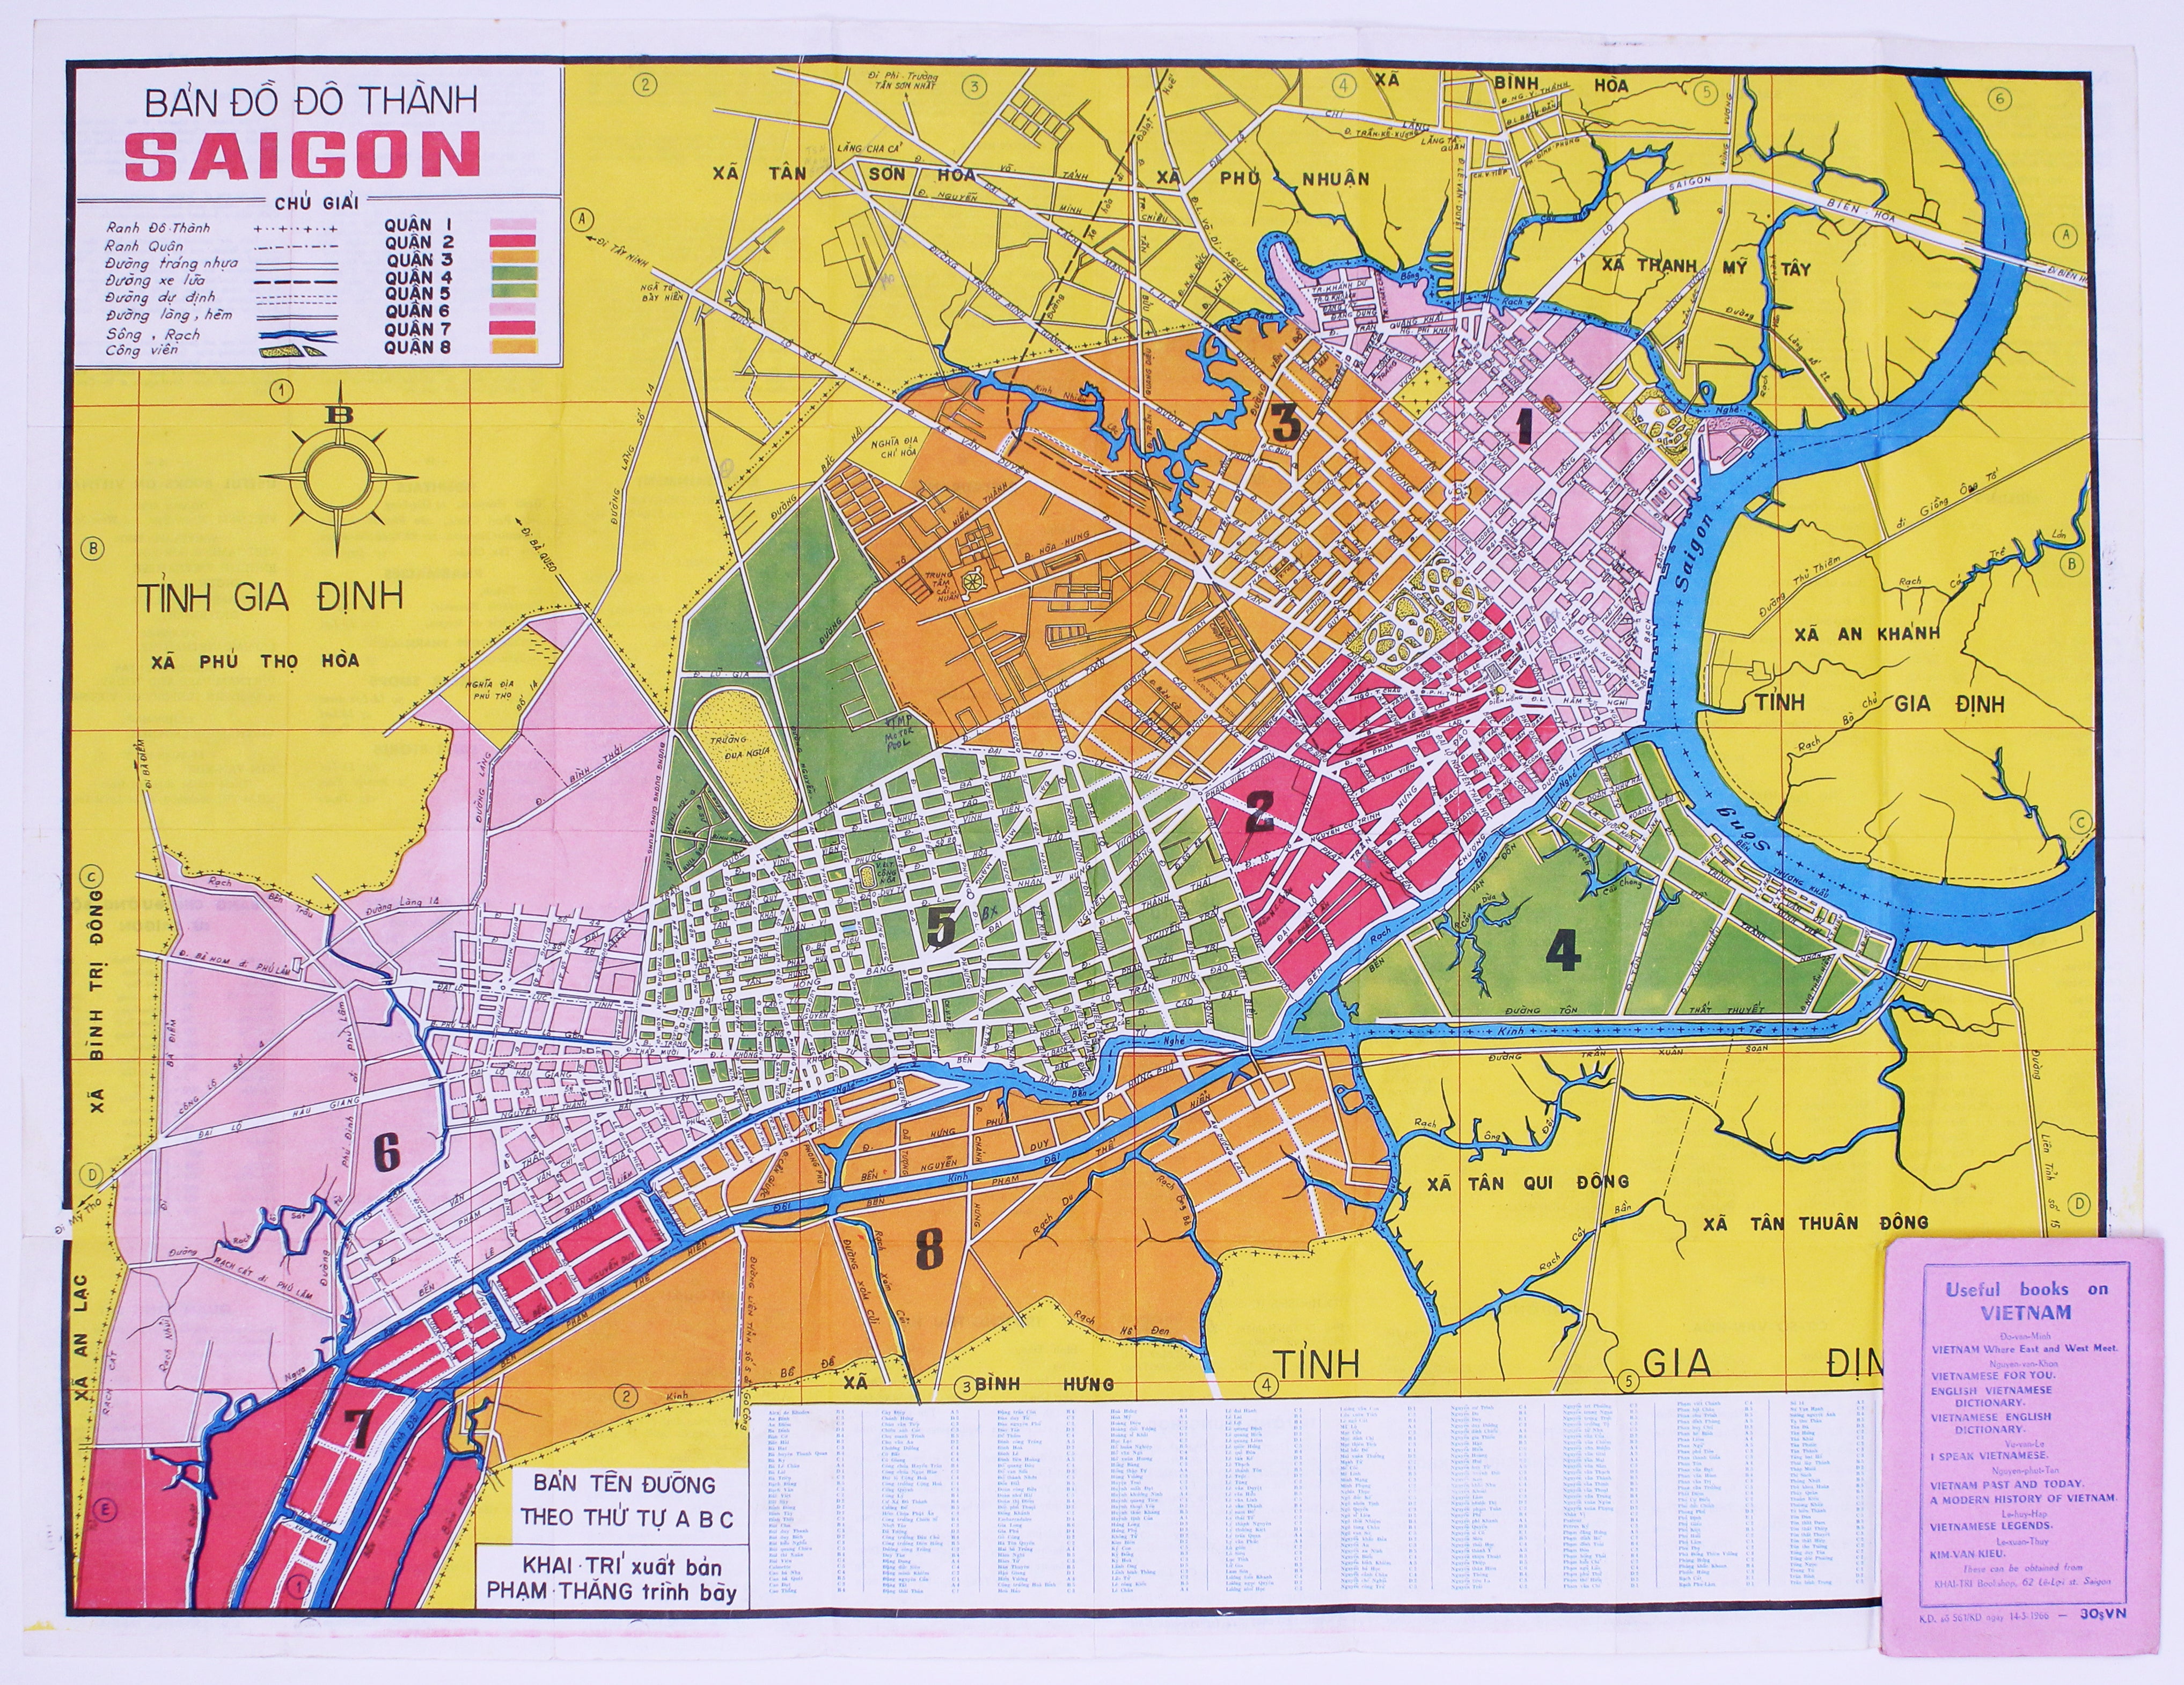 City Map of Saigon